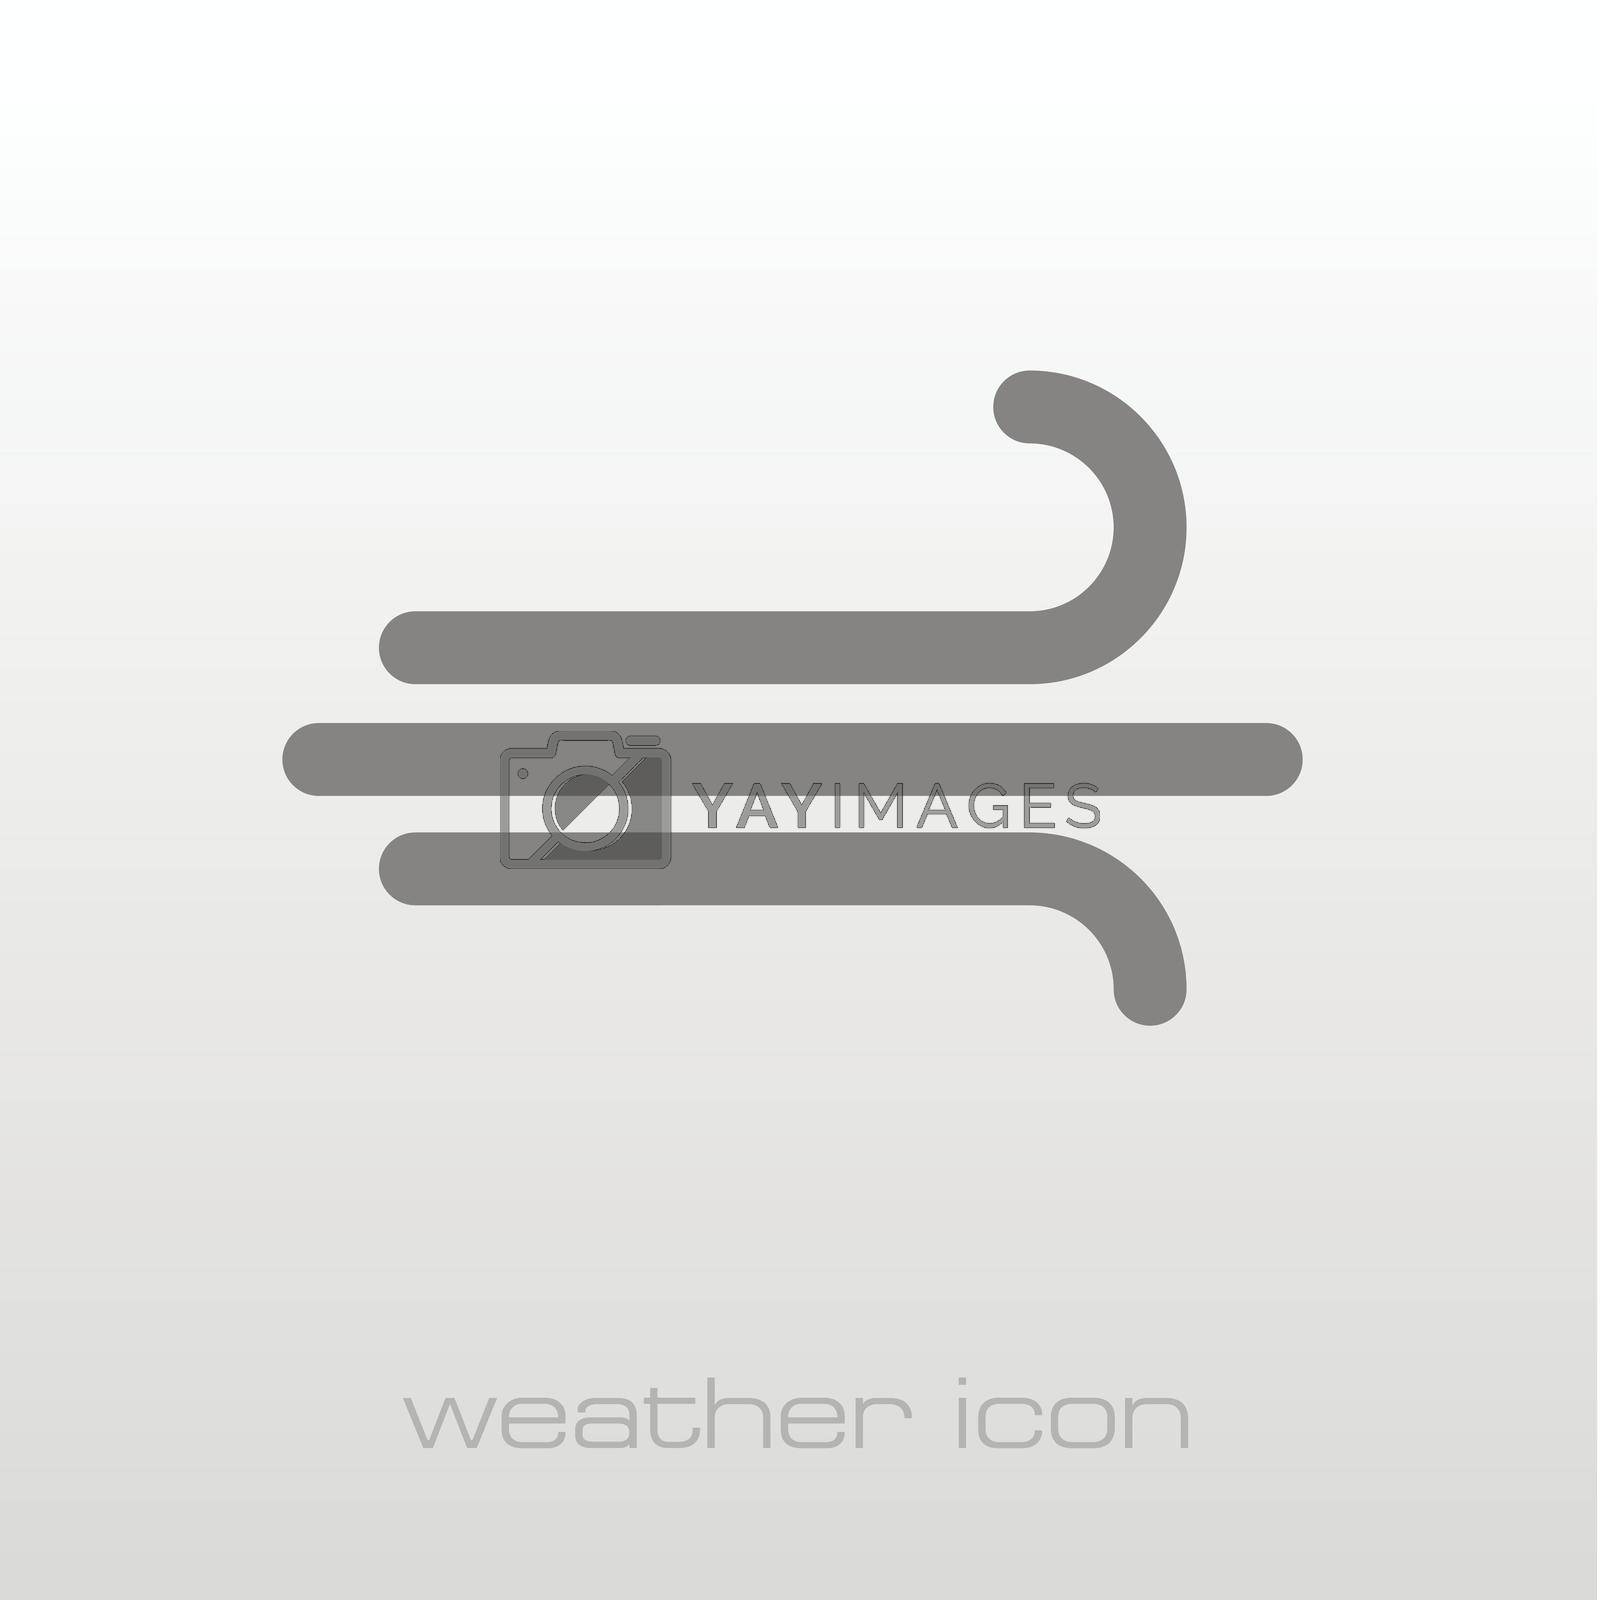 Wind outline icon. Meteorology. Weather. Vector illustration eps 10